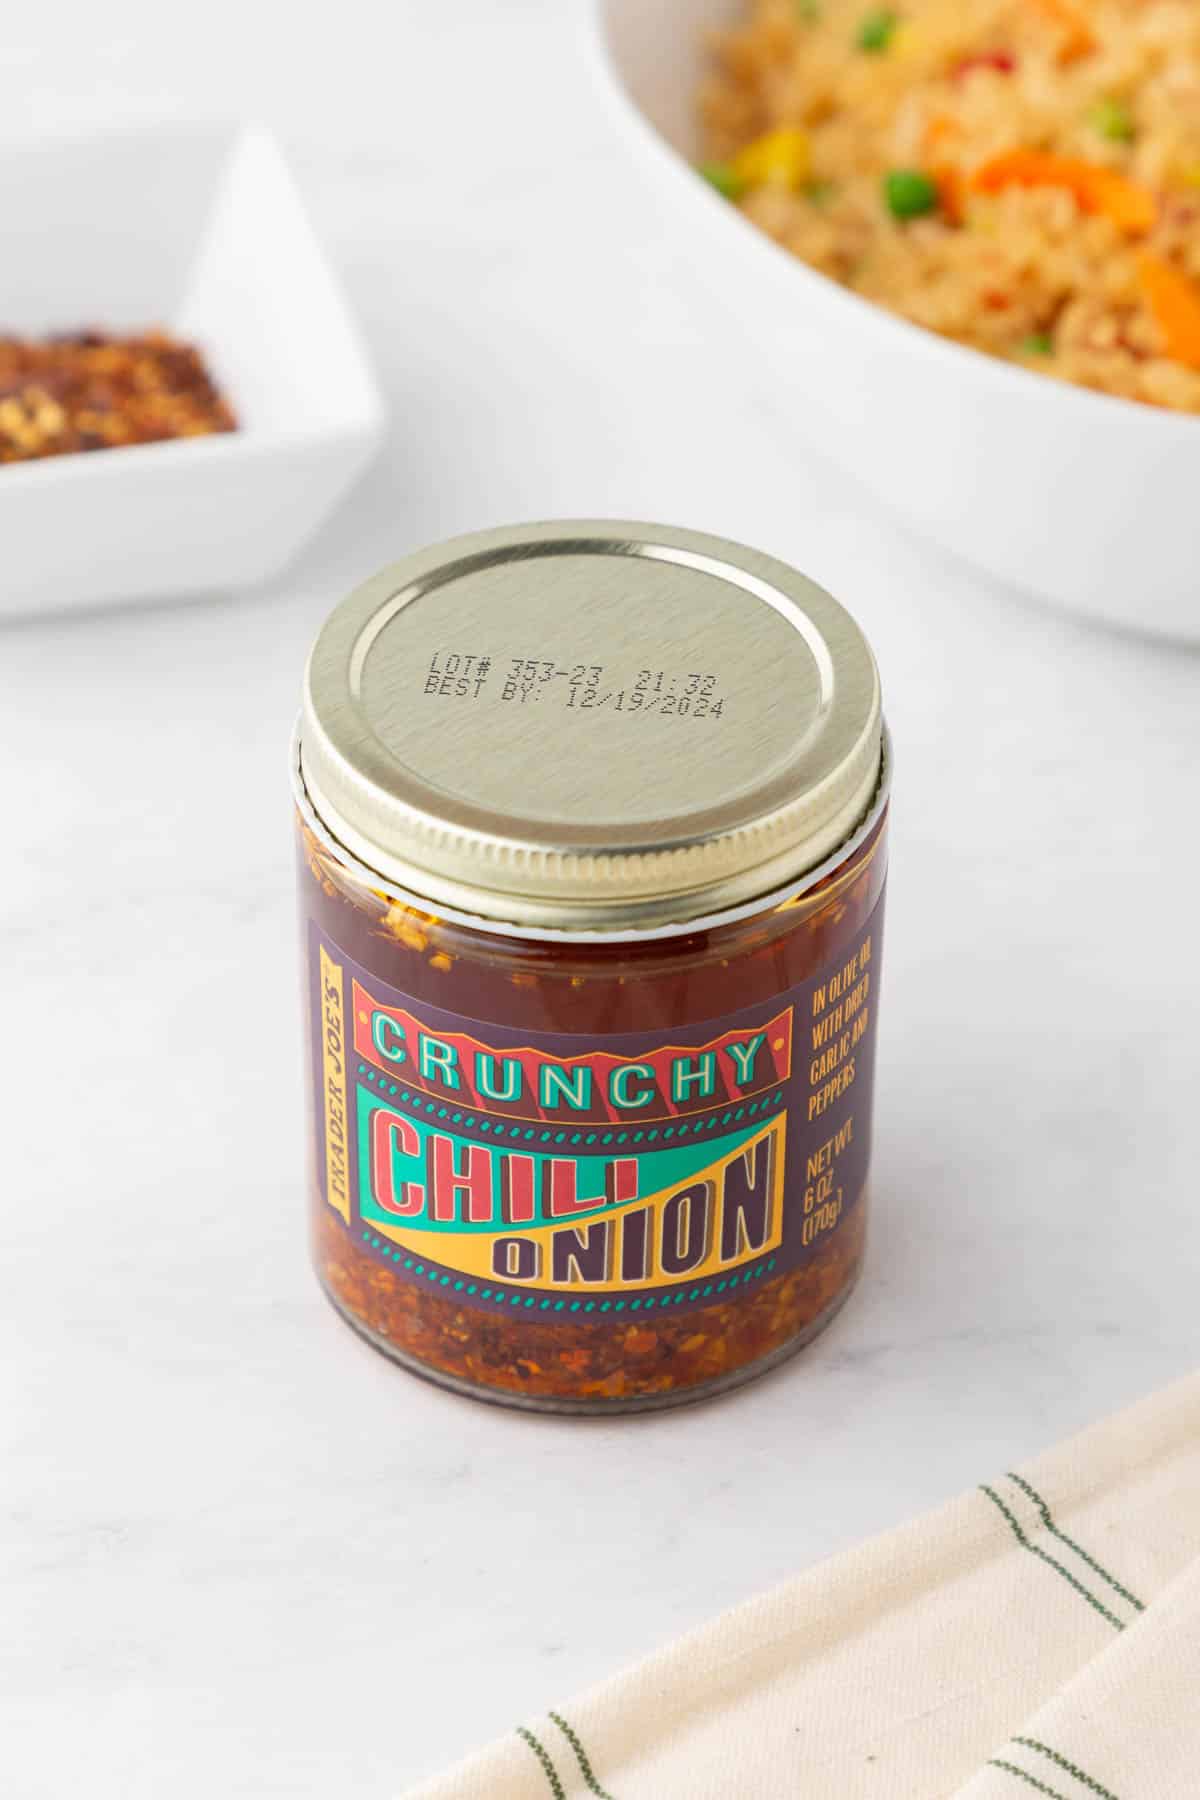 Trader Joe's Crunchy Chili onion jar.